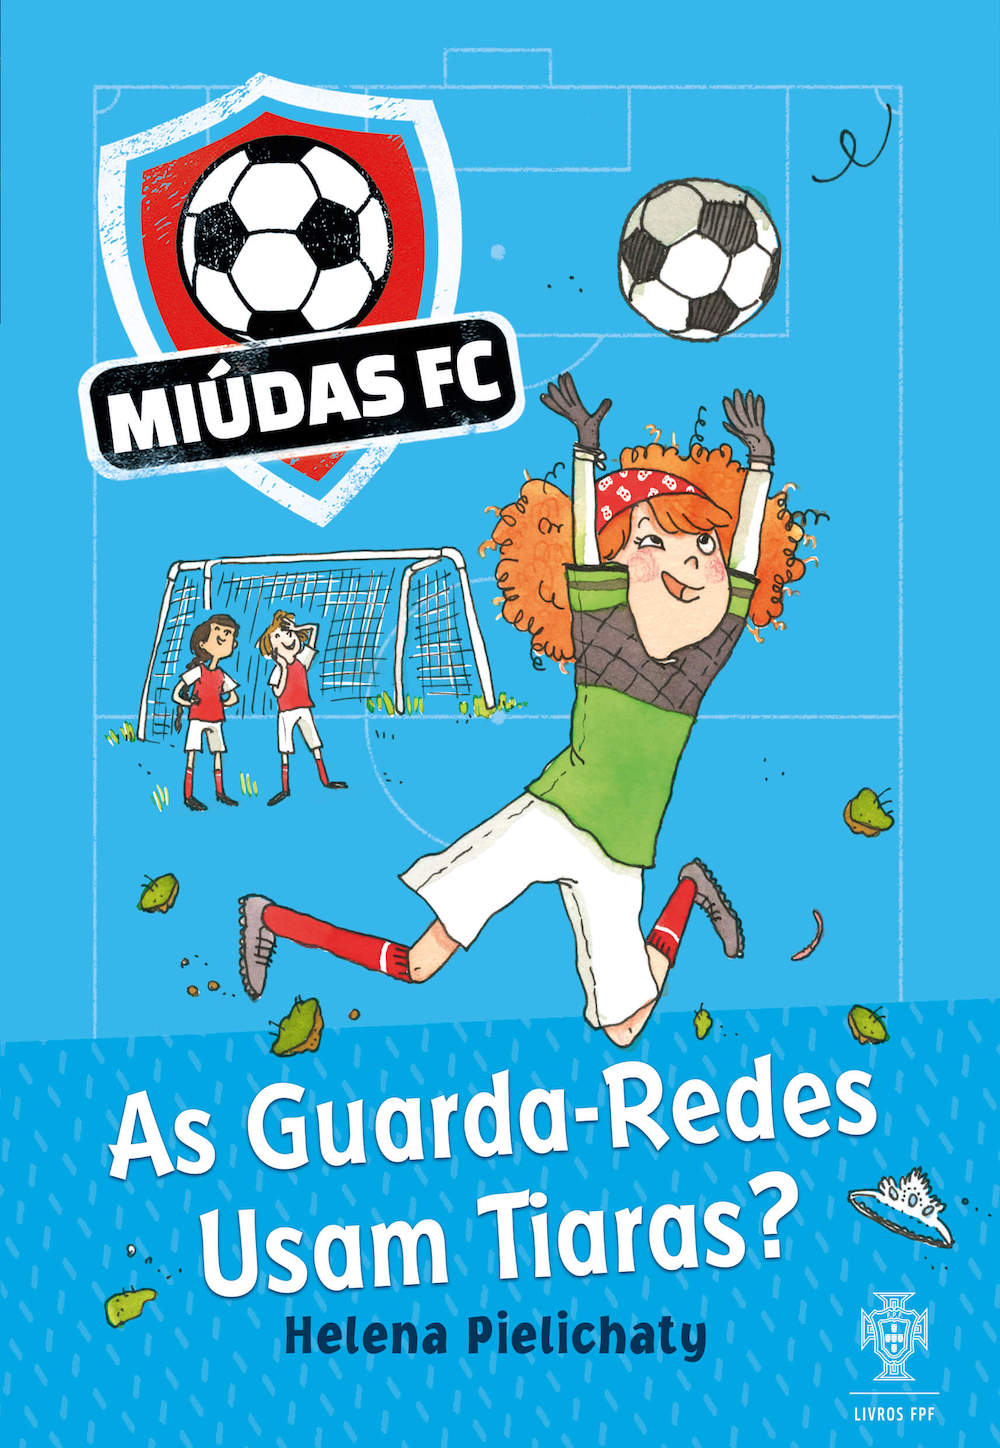 Miúdas FC — As Guarda-Redes Usam Tiaras?